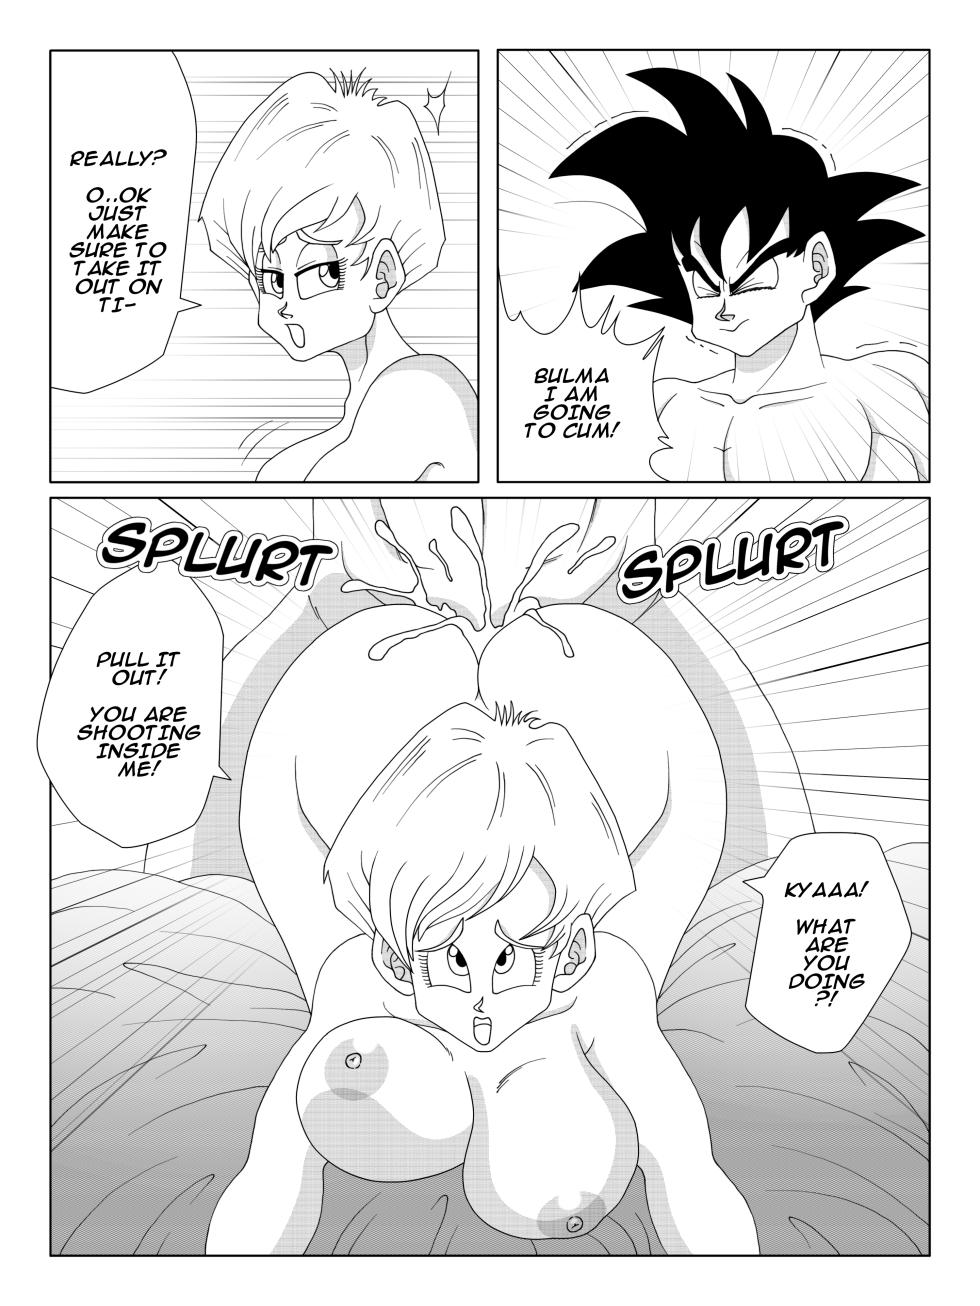 Reunion - Goku and Bulma - Story and Art by BetterZ (Twitter: BetterZ18) - Page 8